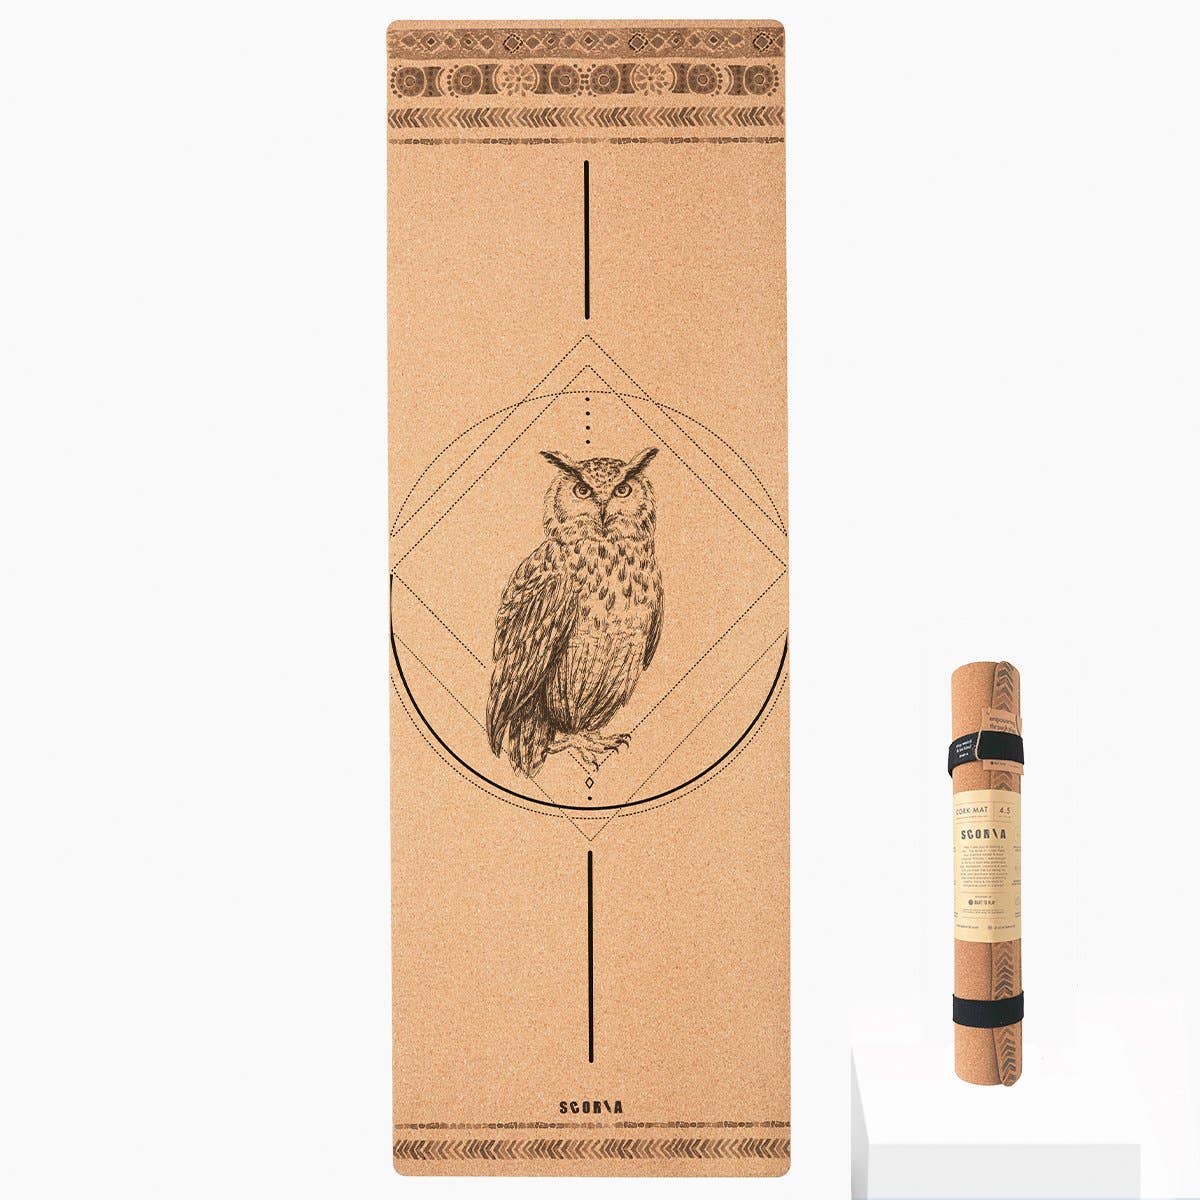 Owl Cork Yoga Mat by Scoria